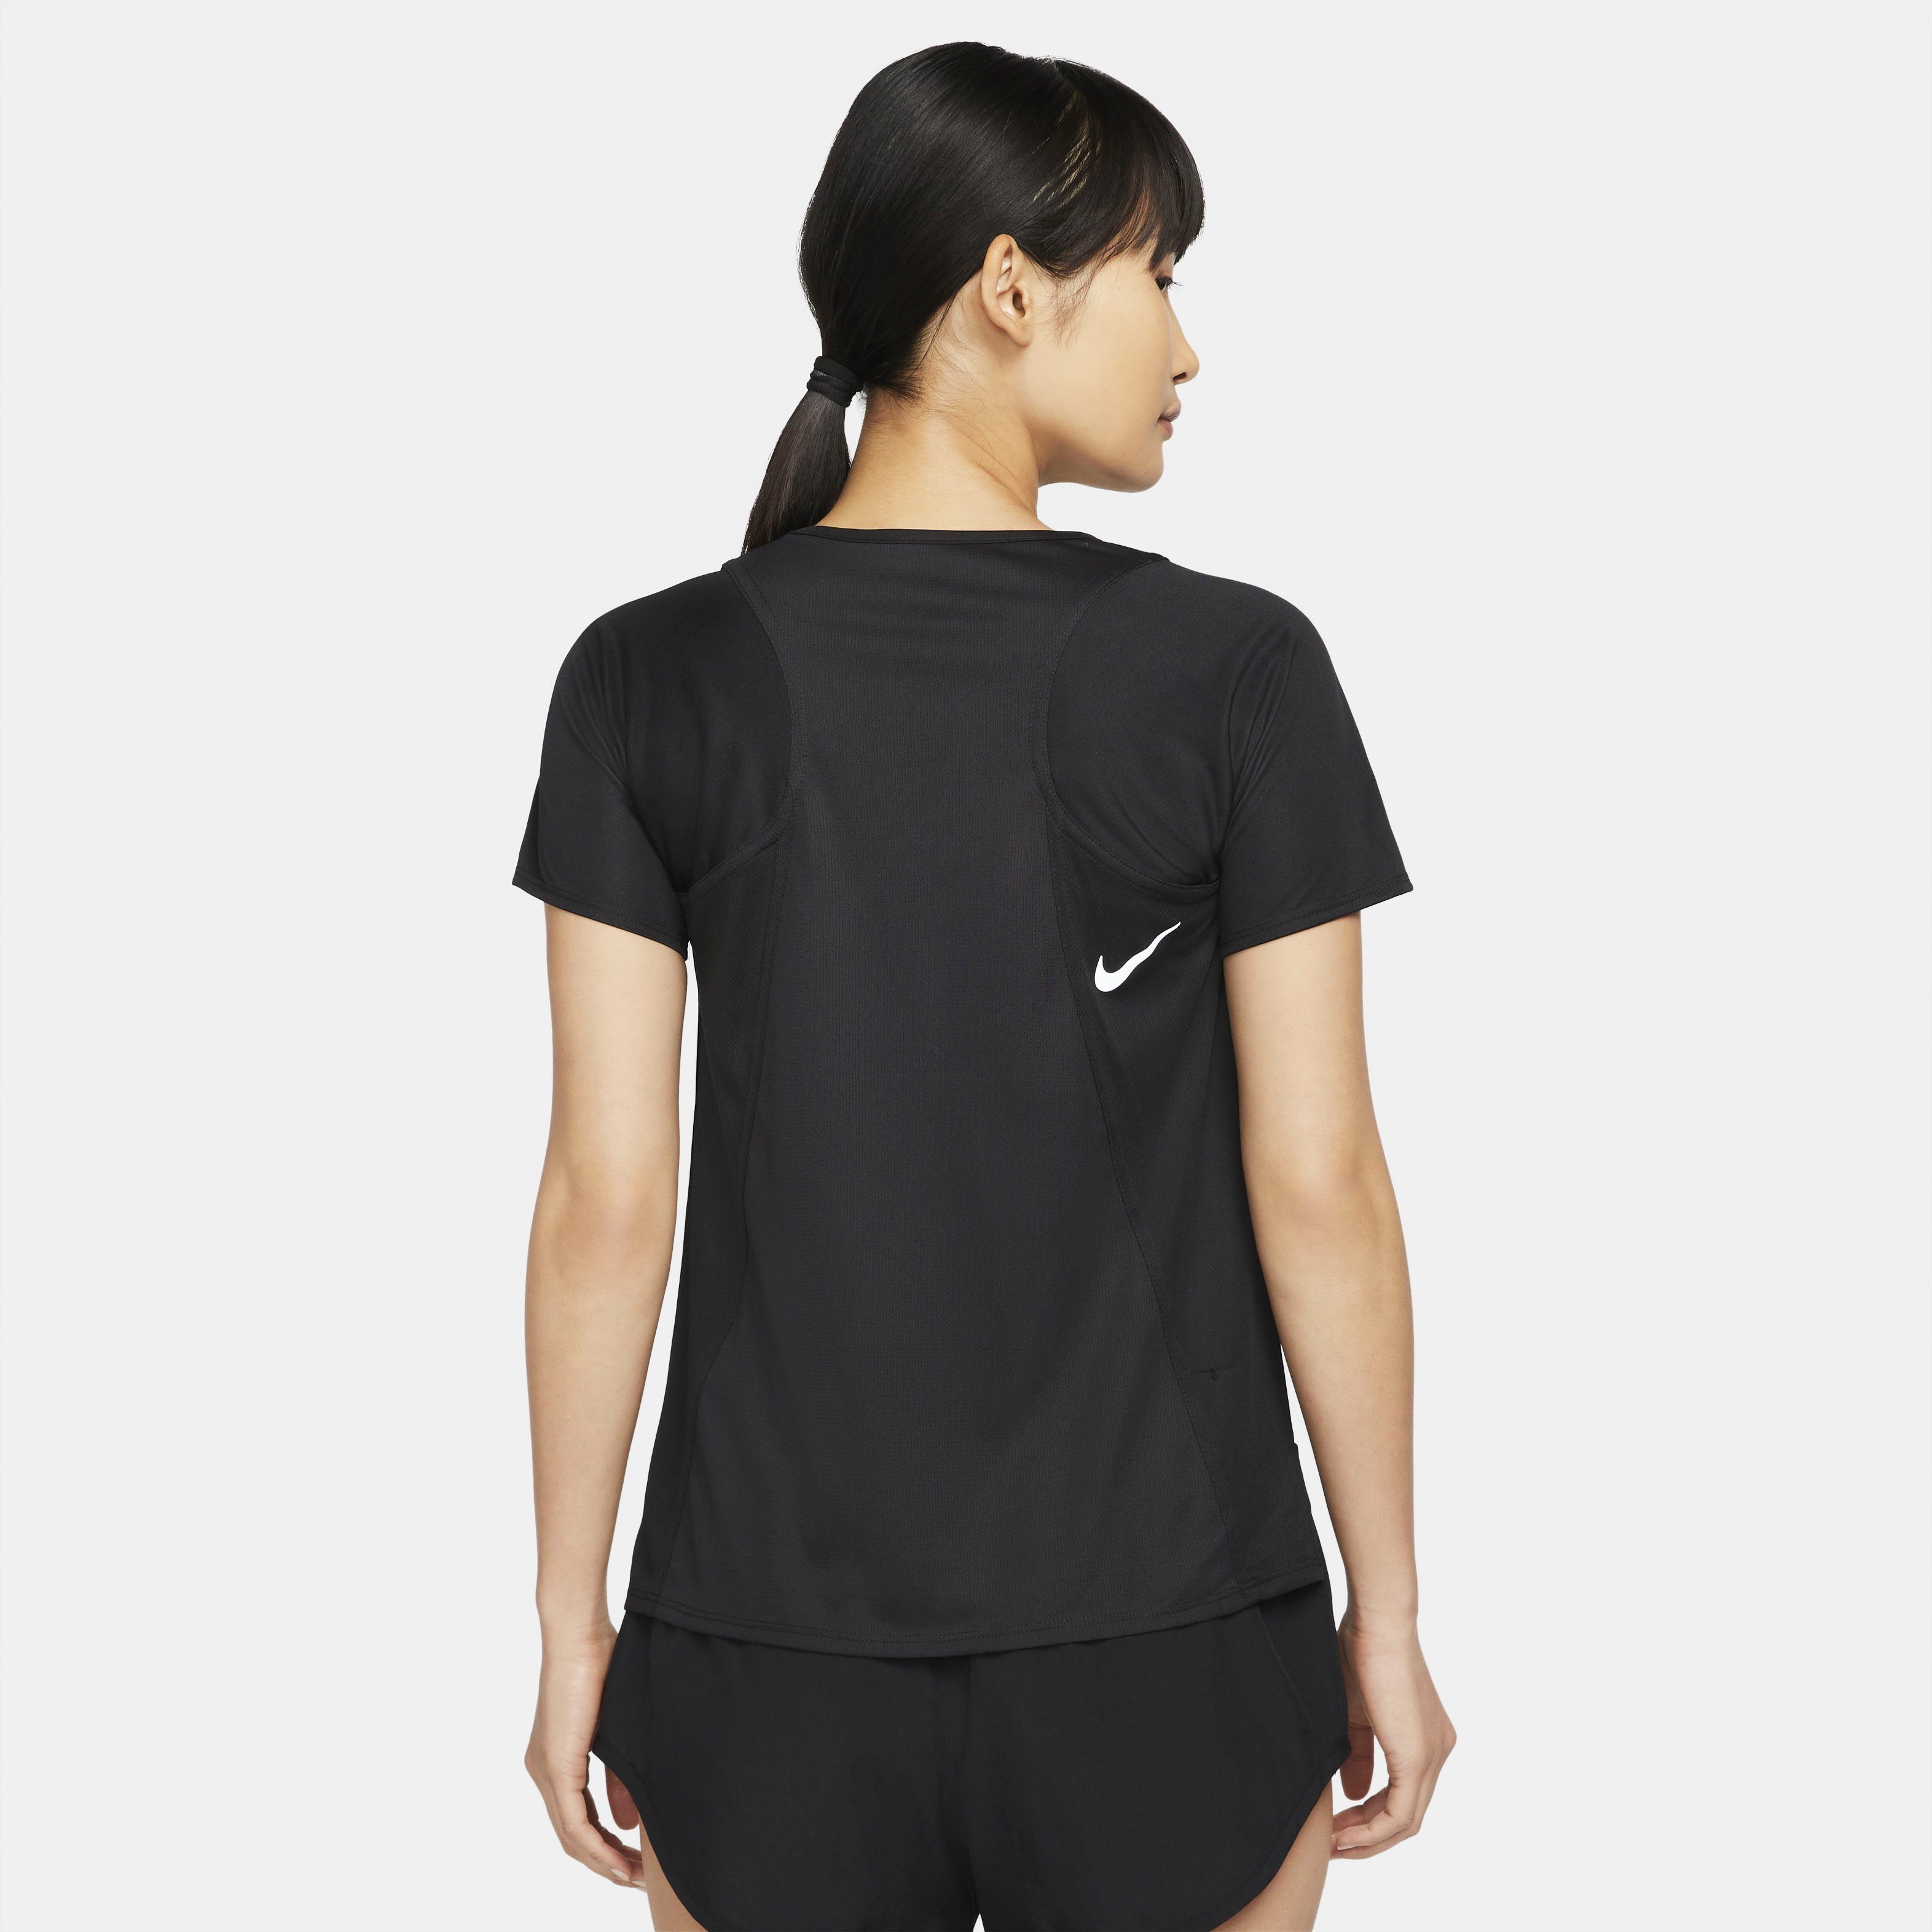 SHORT-SLEEVE BLACK/REFLECTIVE RUNNING TOP Nike WOMEN'S RACE Laufshirt DRI-FIT SILV